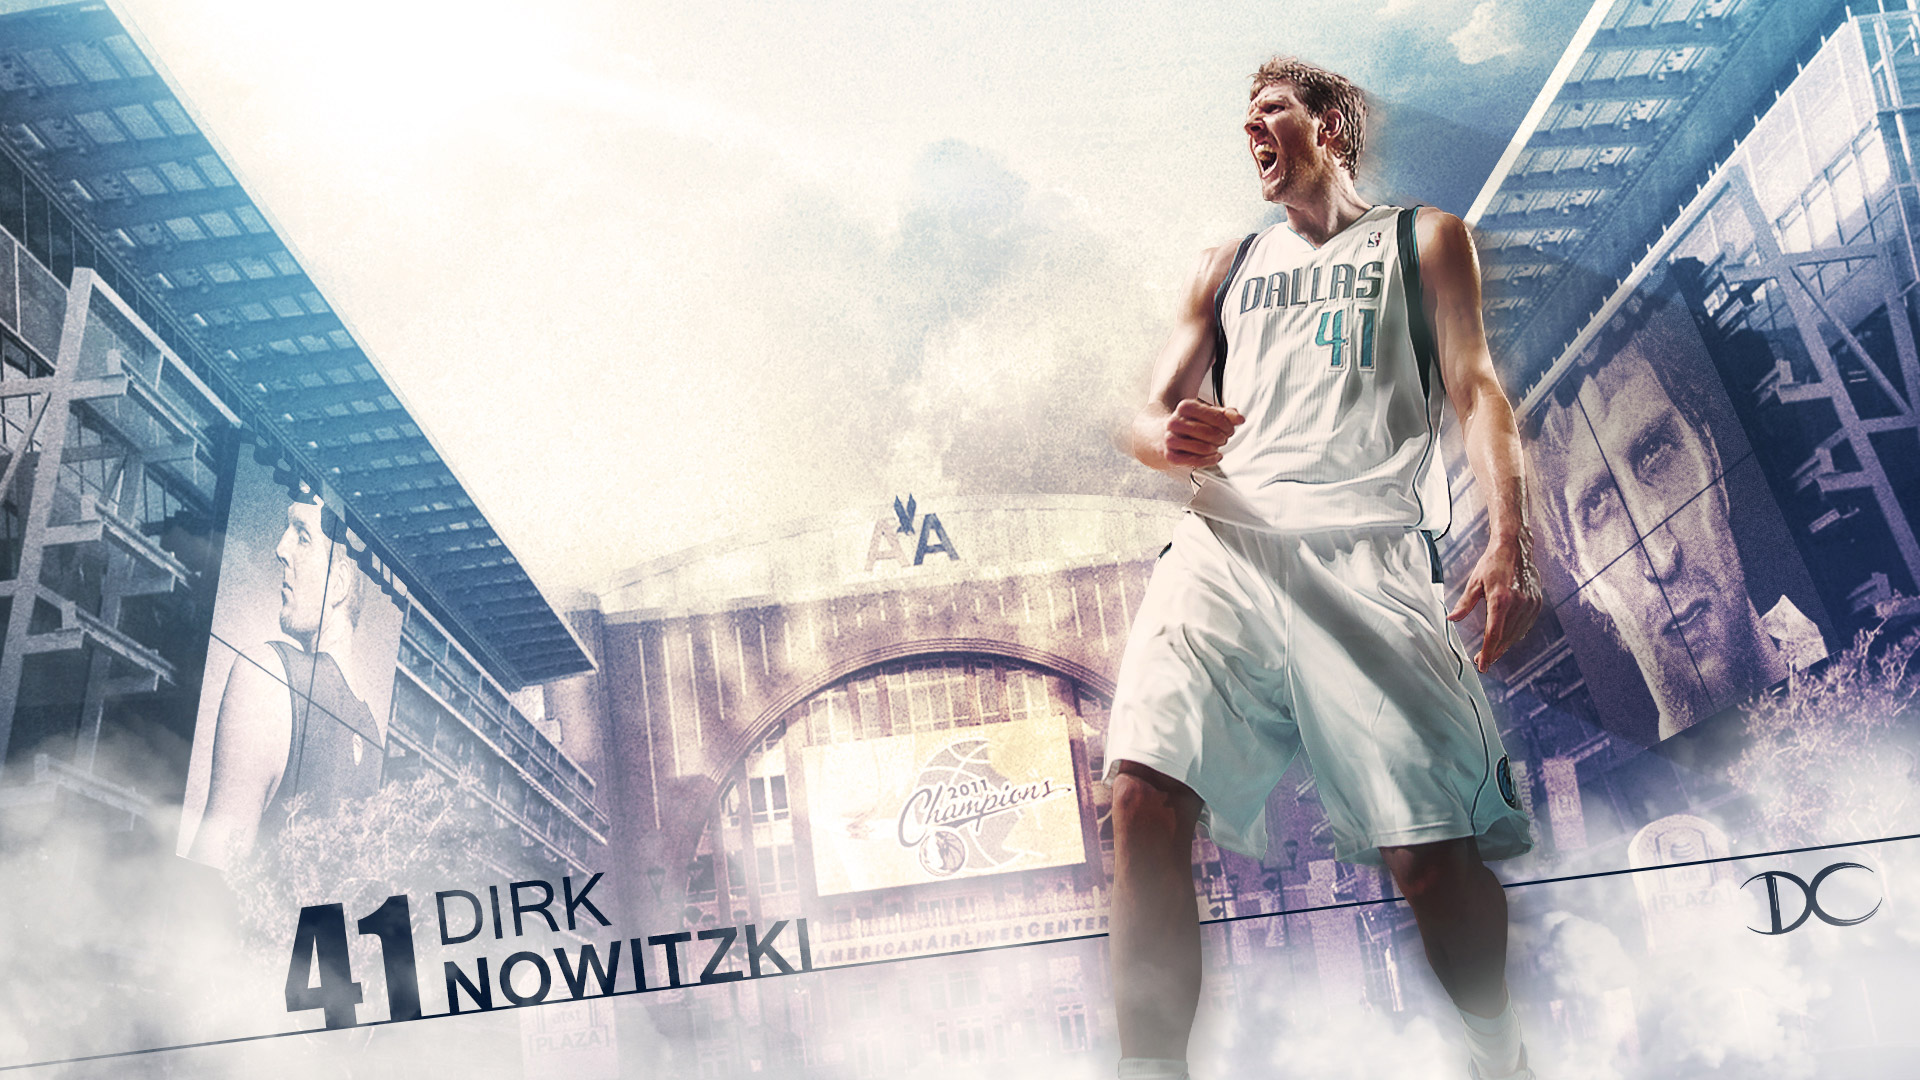 Dirk Nowitzki Legacy 2014 Wallpaper | Basketball Wallpapers at BasketWallpapers.com1920 x 1080